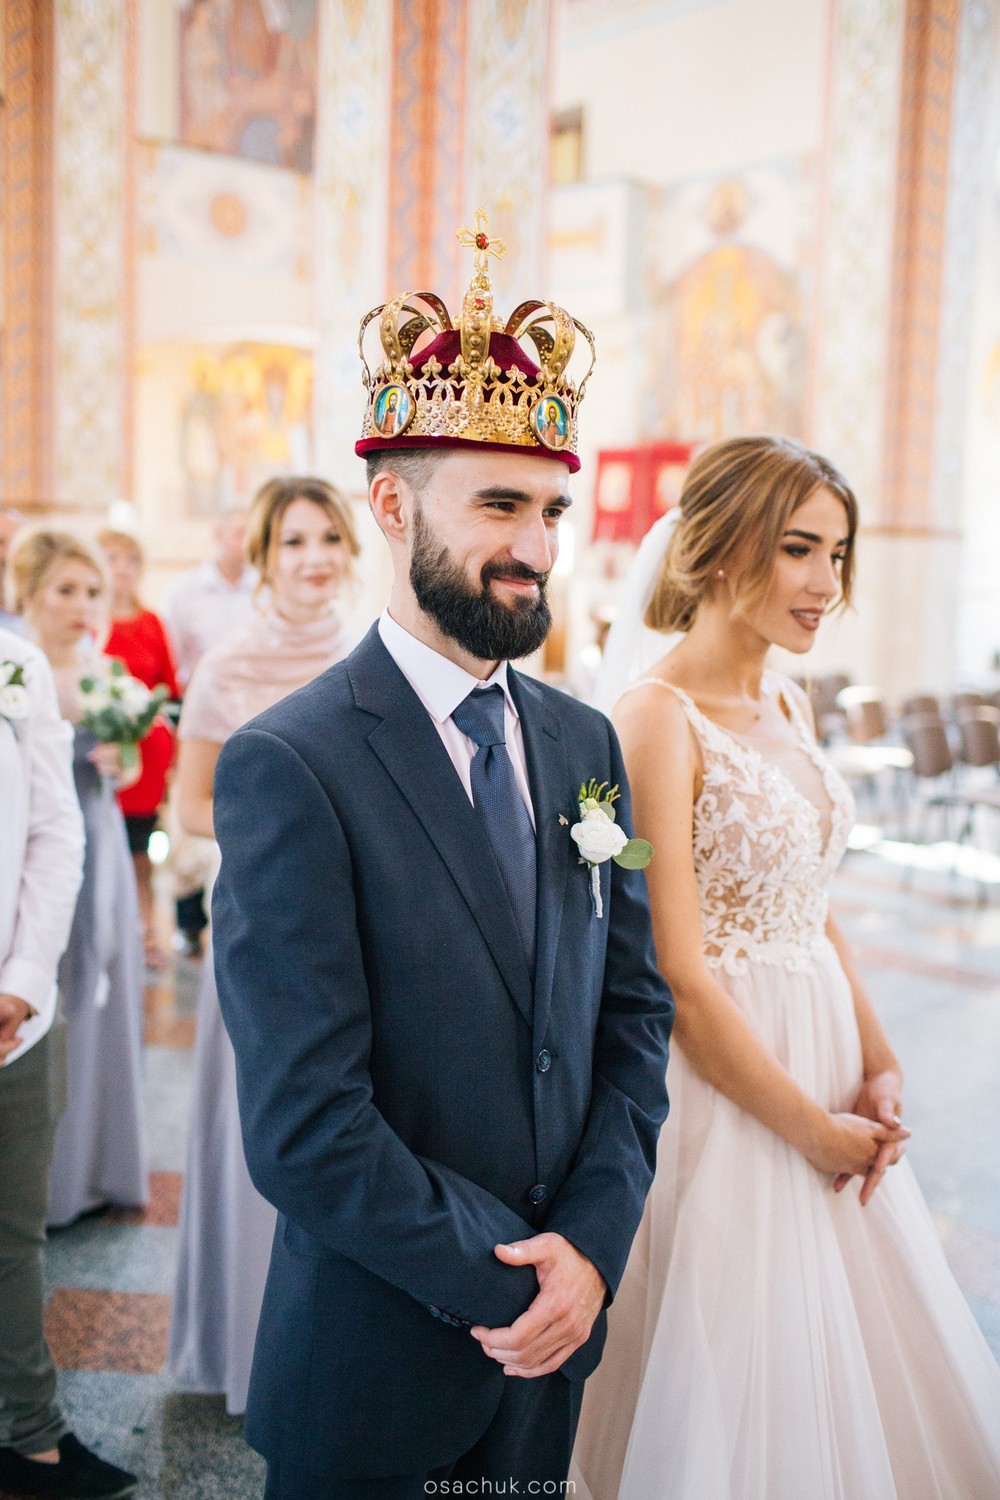 Катедральний Собор Преображення Христового весілля фотограф Осачук